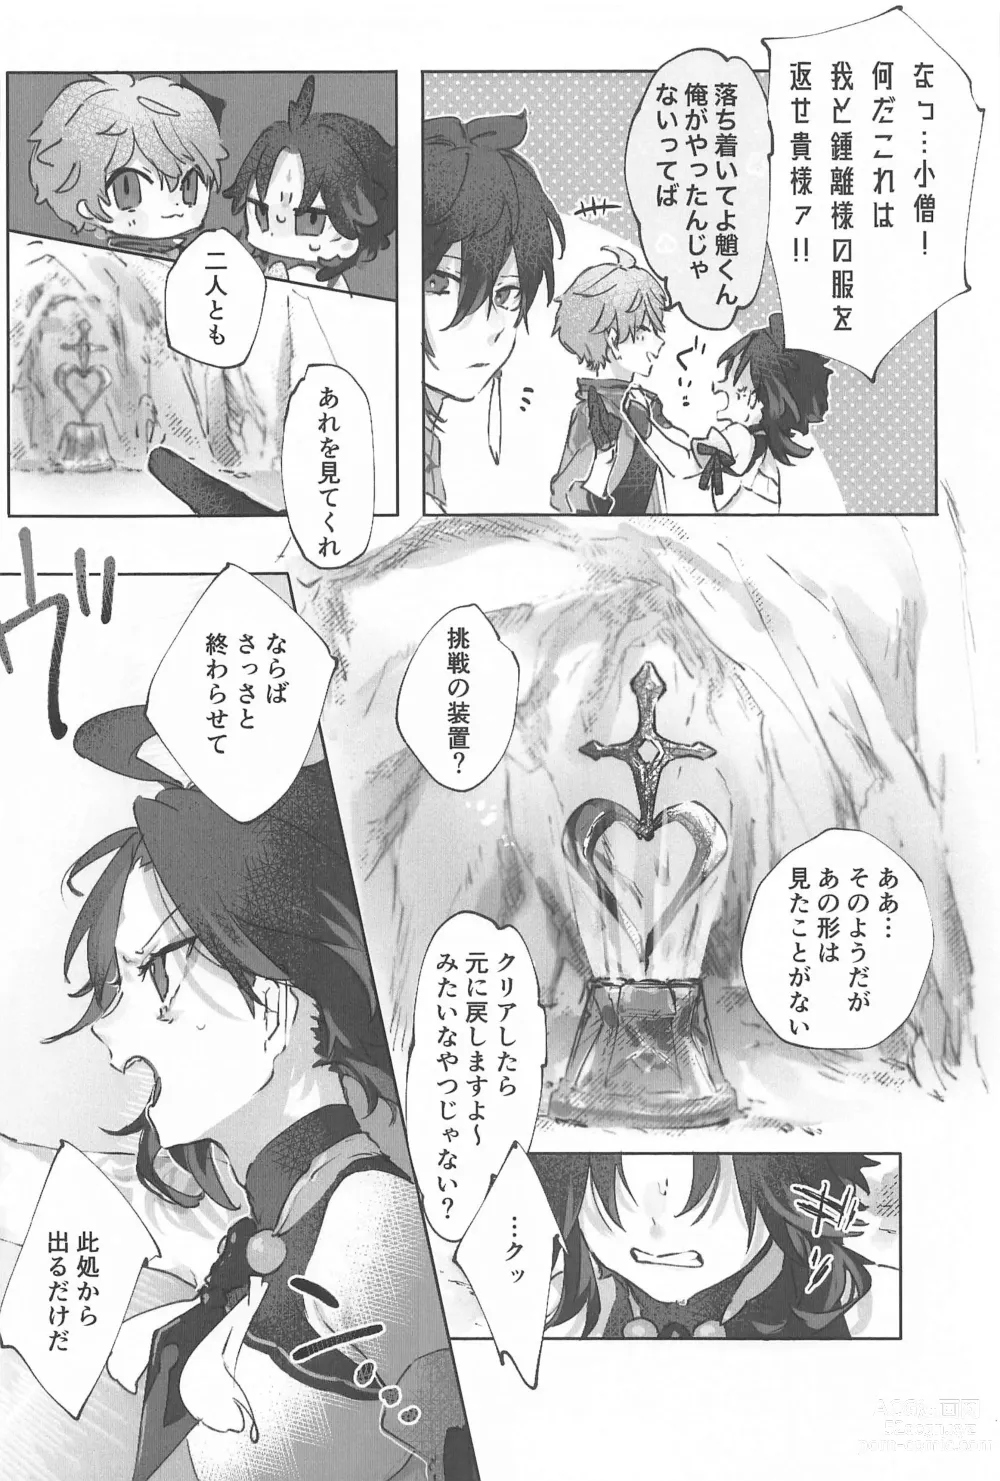 Page 16 of doujinshi Okawari.